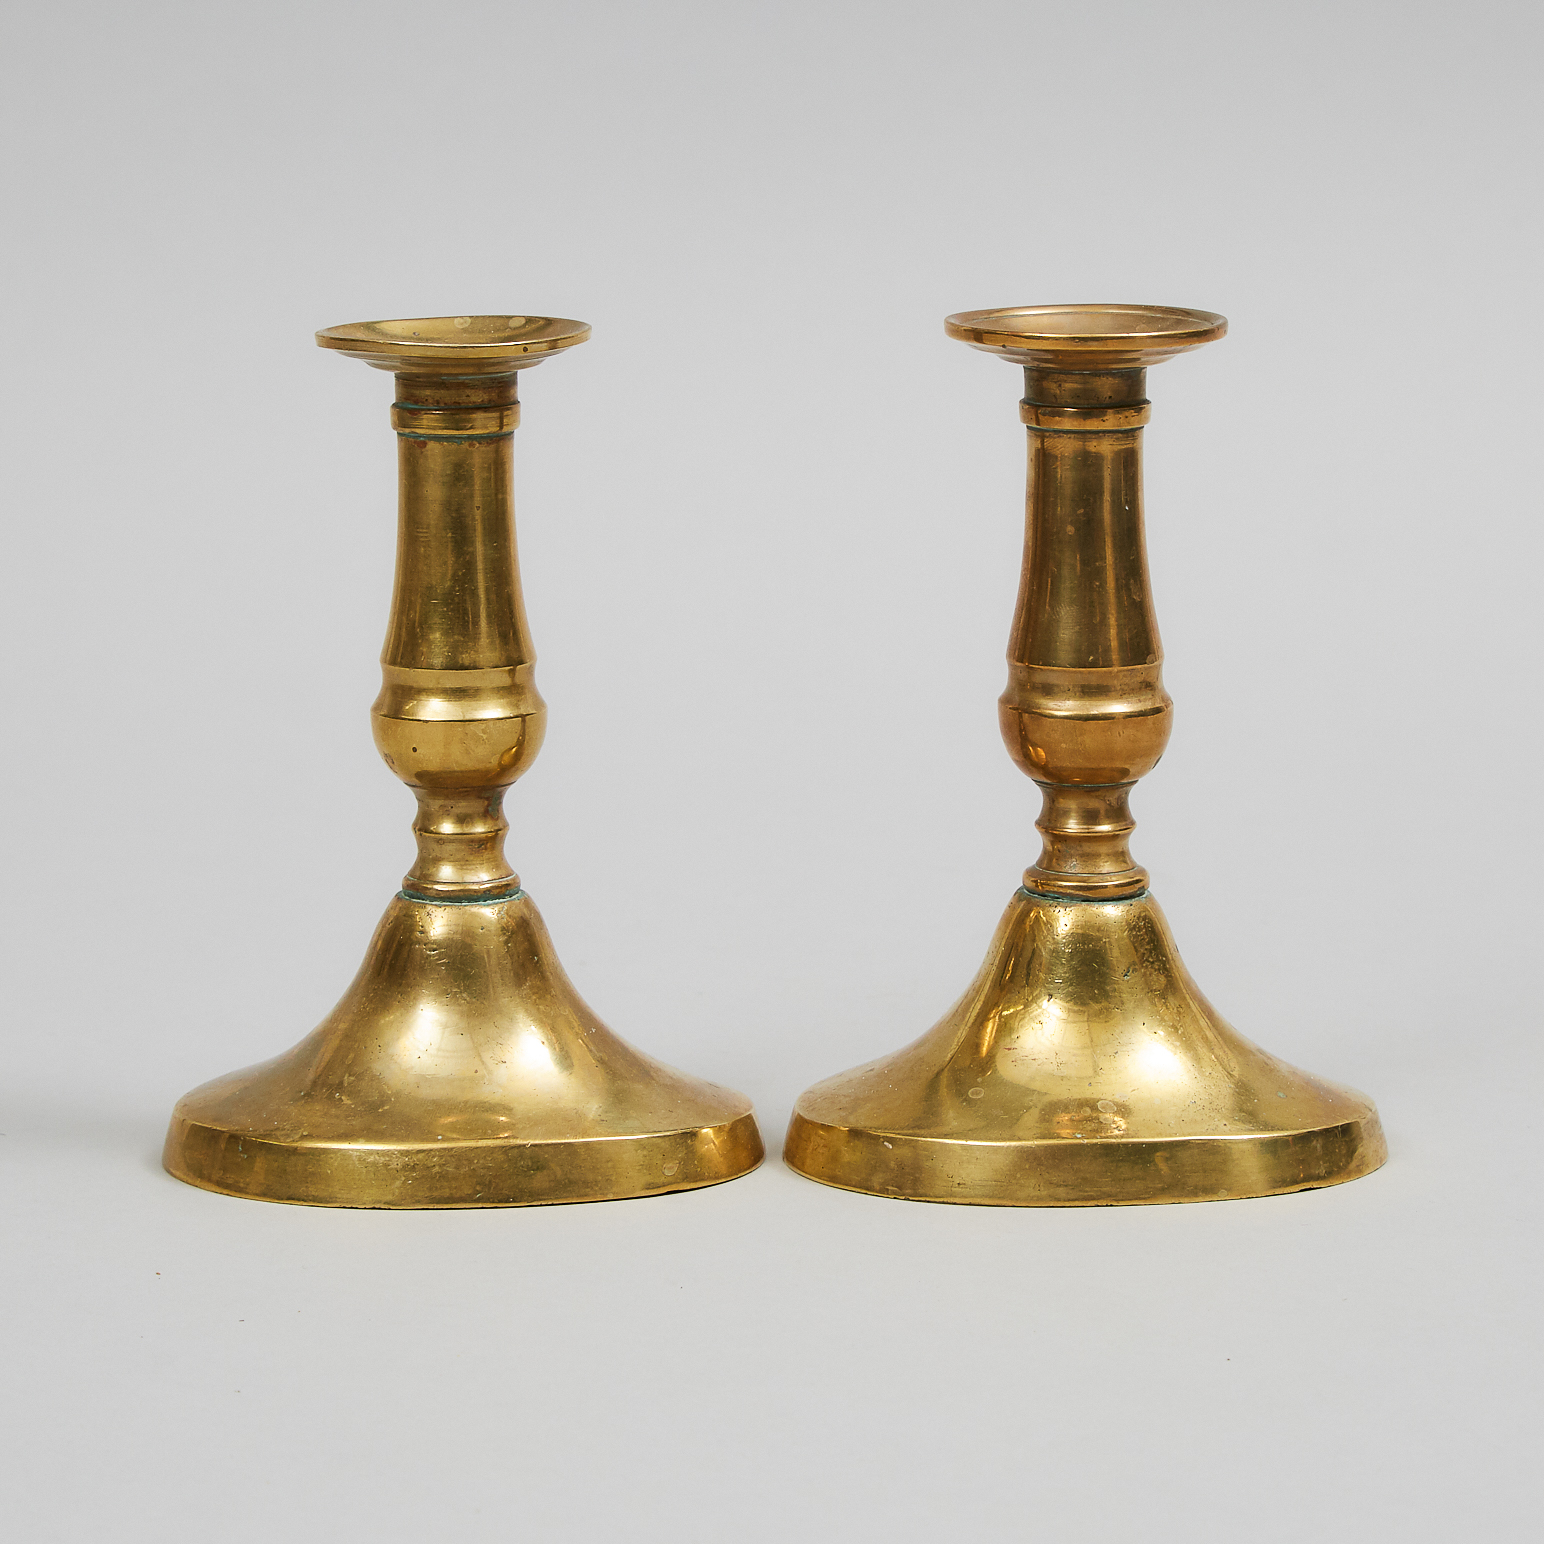 Pair of English Brass Candlesticks, 18th/19th century